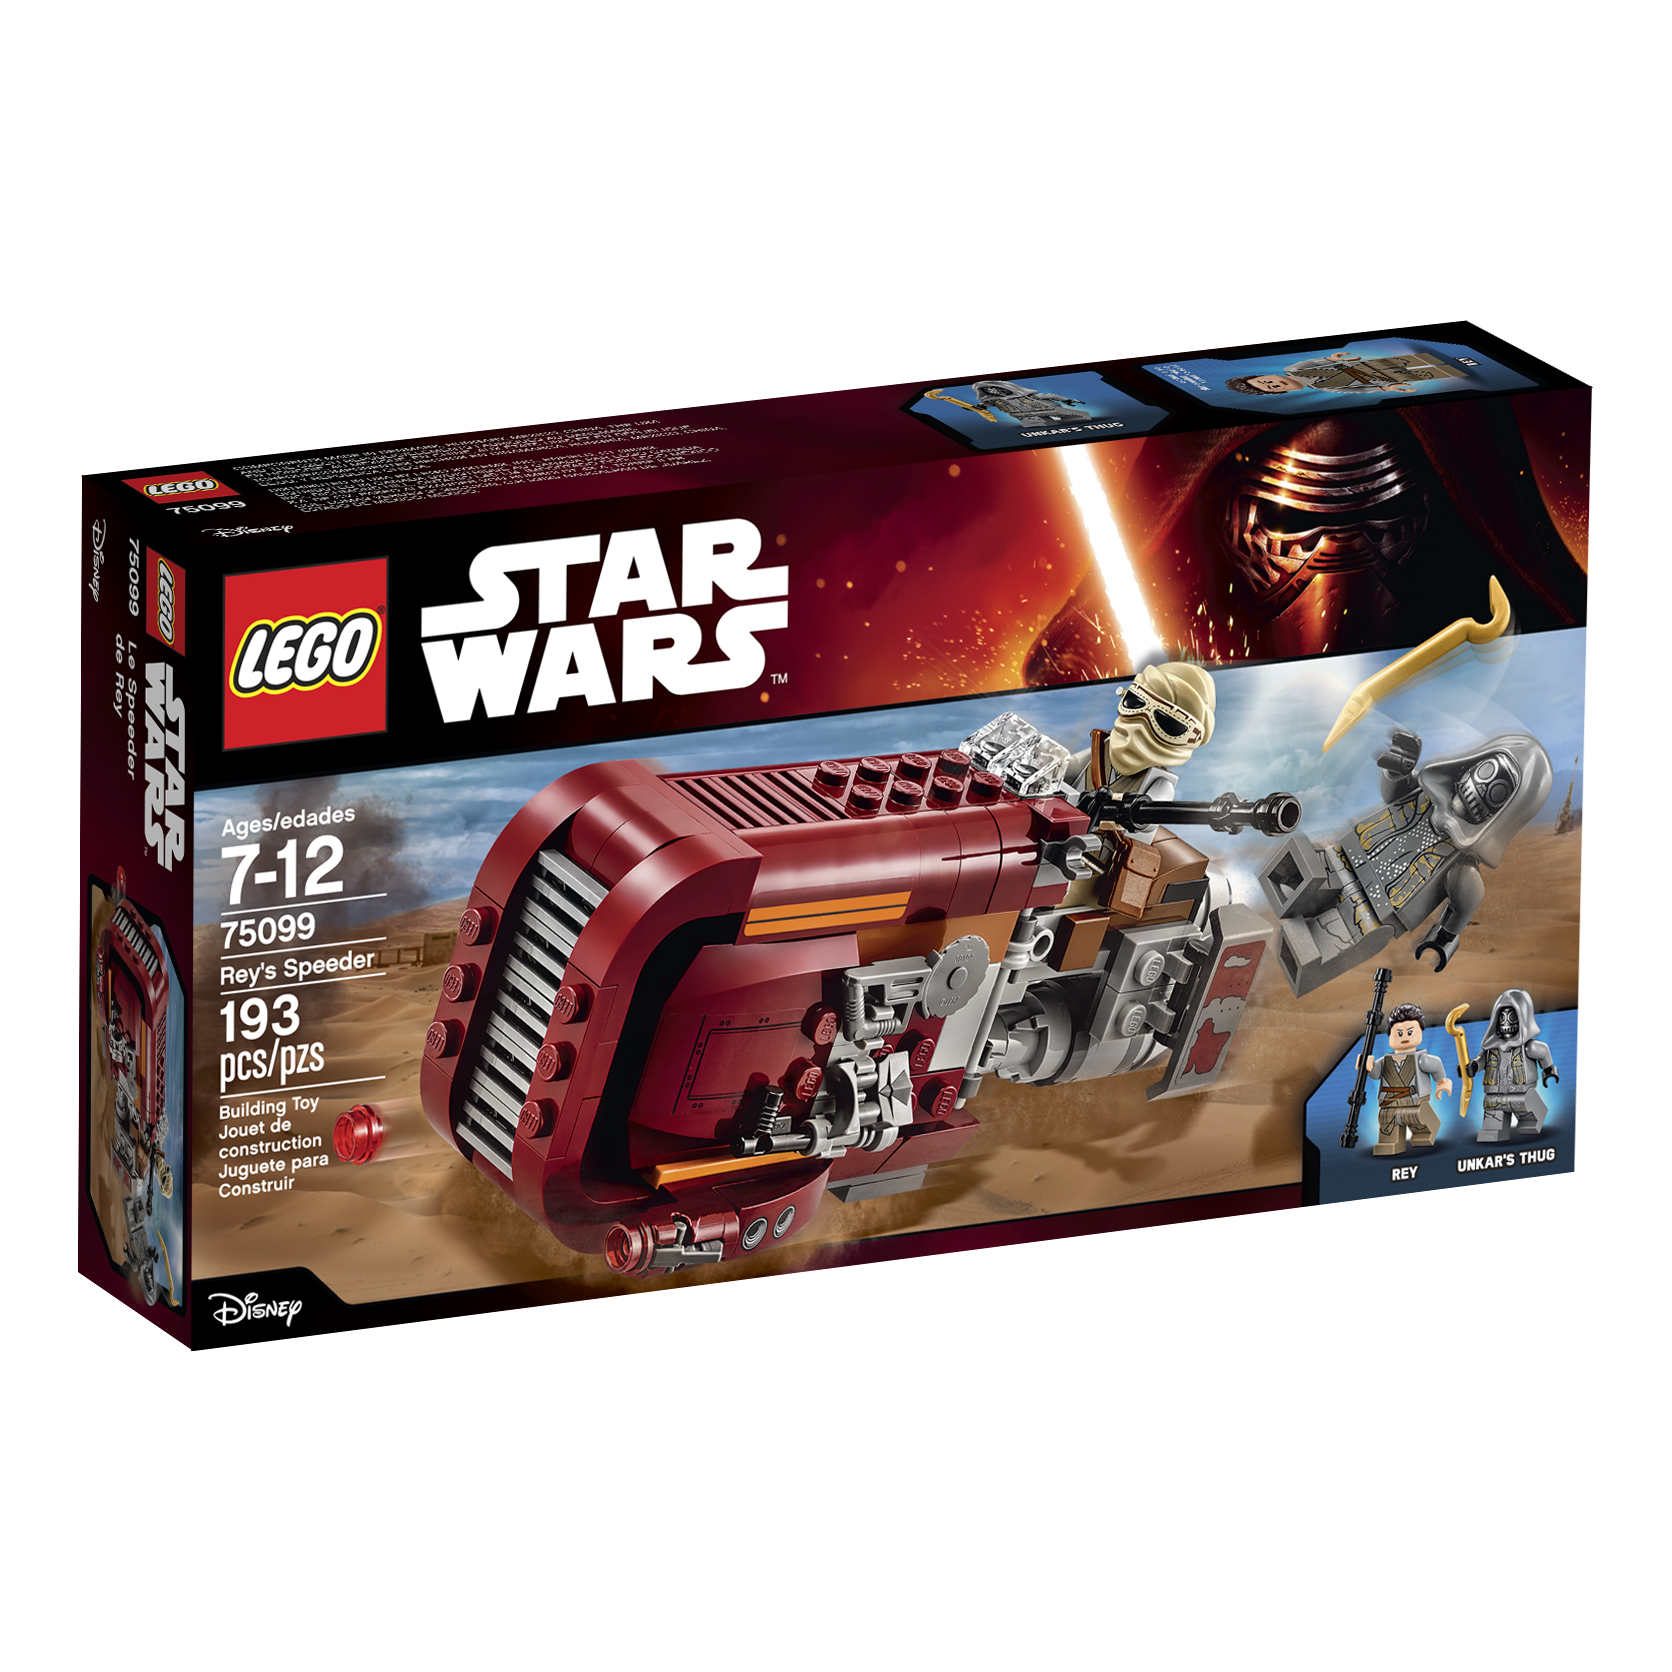 75184 75099 Star Wars Figures 3 Lego Unkar's Thugs Minifig Lot 